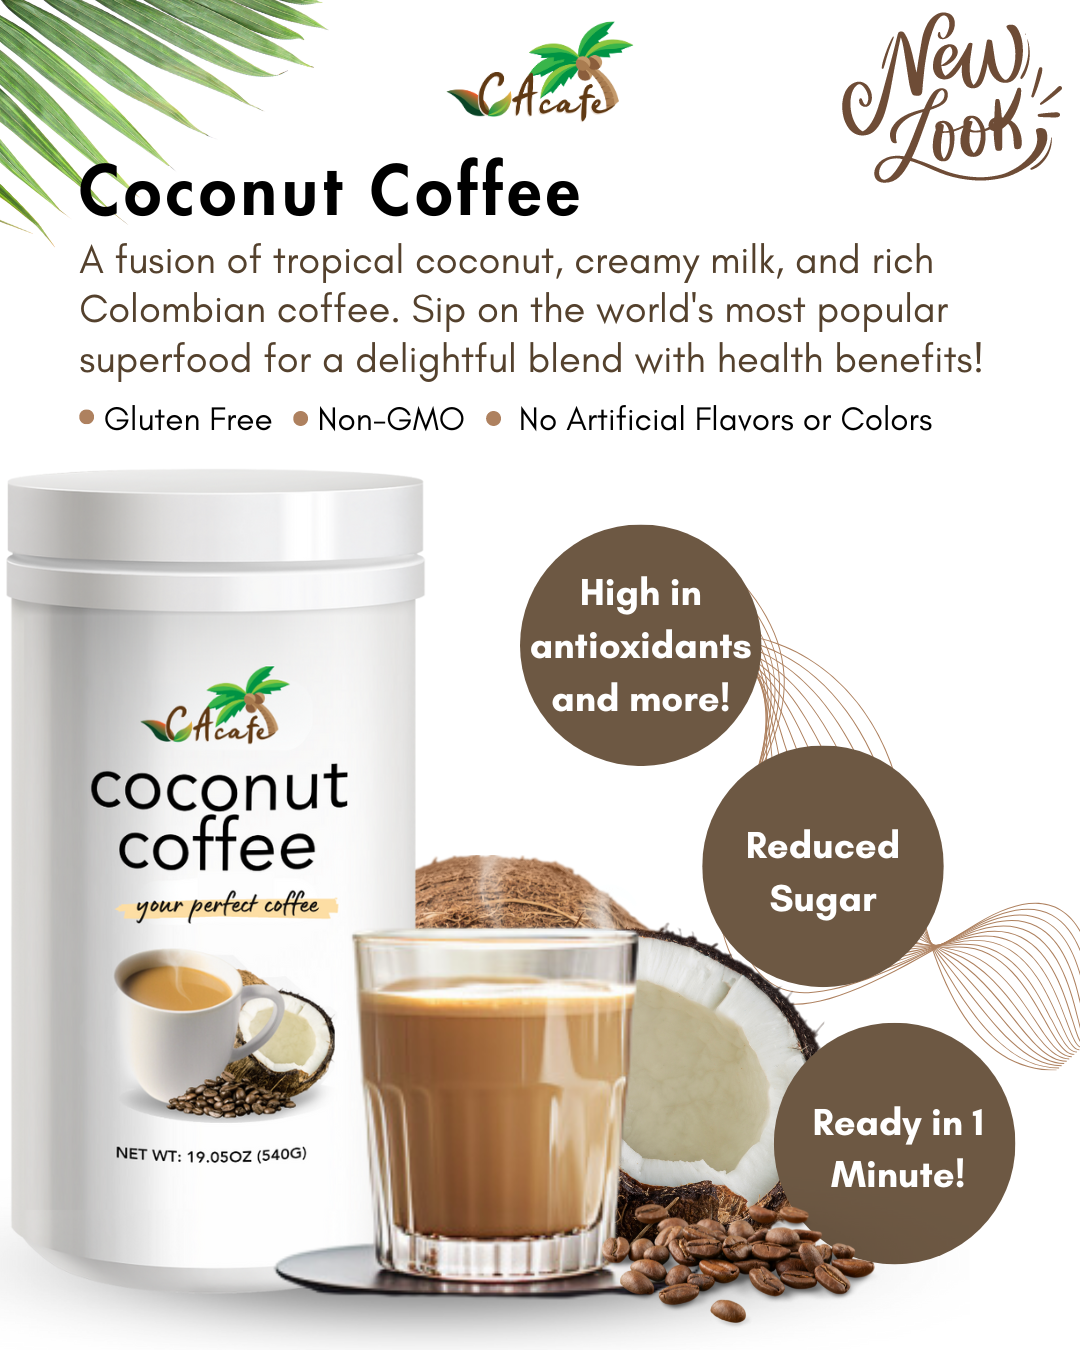 6PK of Coconut Coffee 2.0 (New Look)